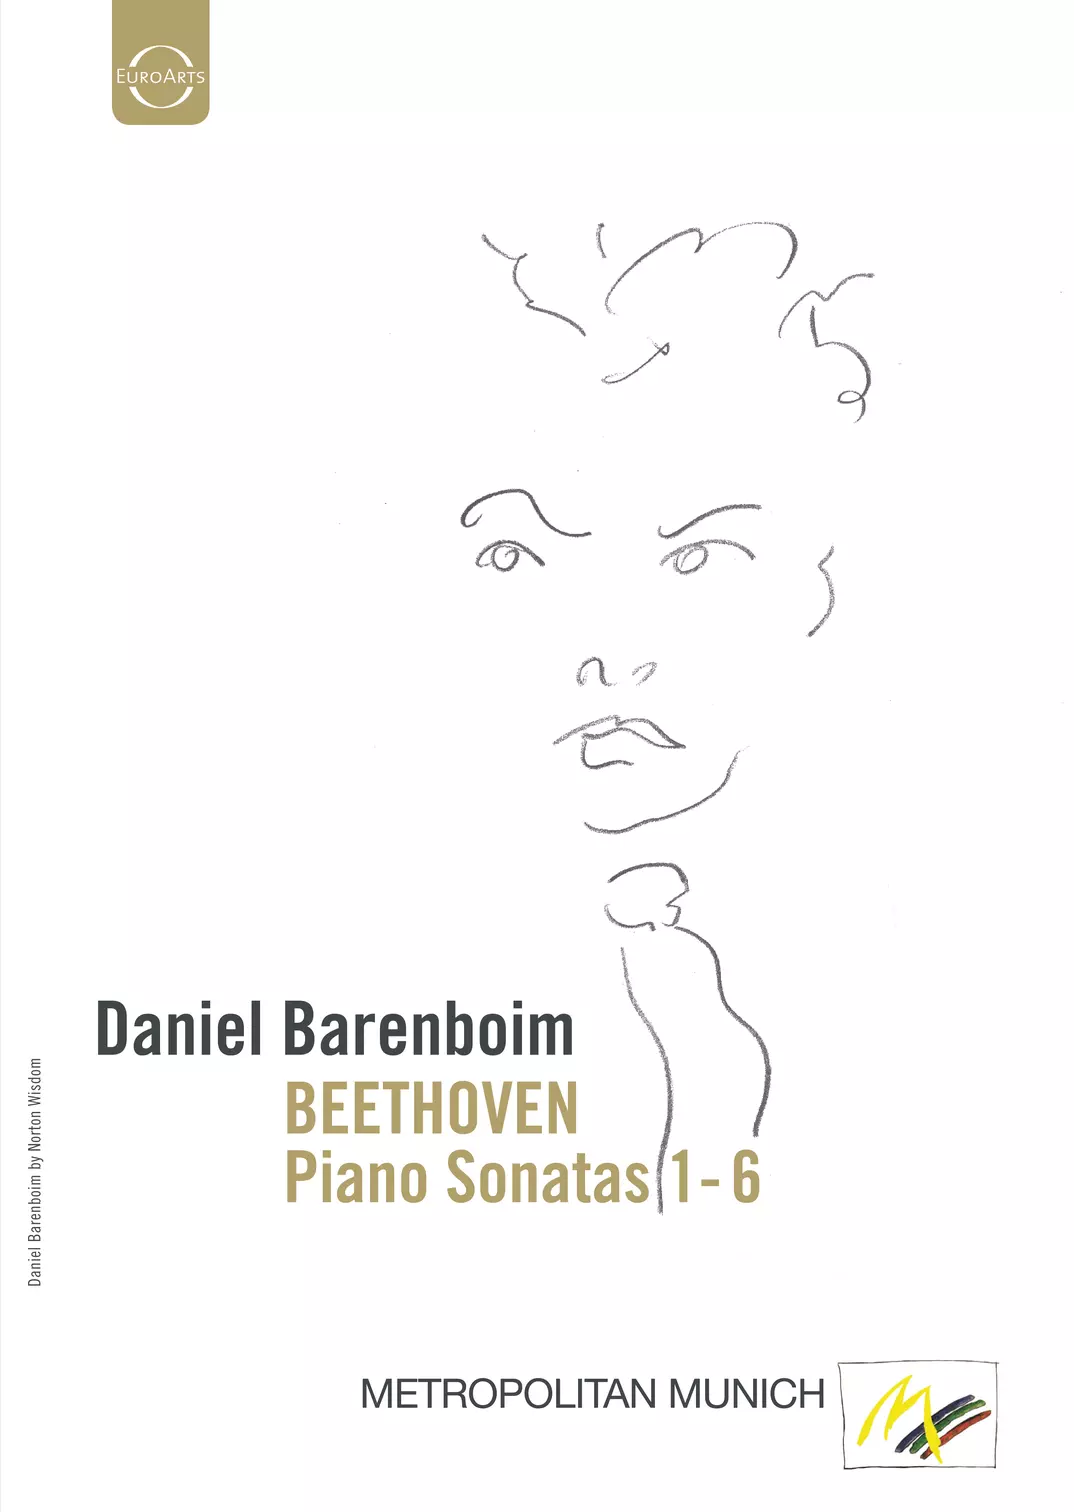 Barenboim plays Beethoven Piano Sonatas Nos. 1-6, Part 1/5